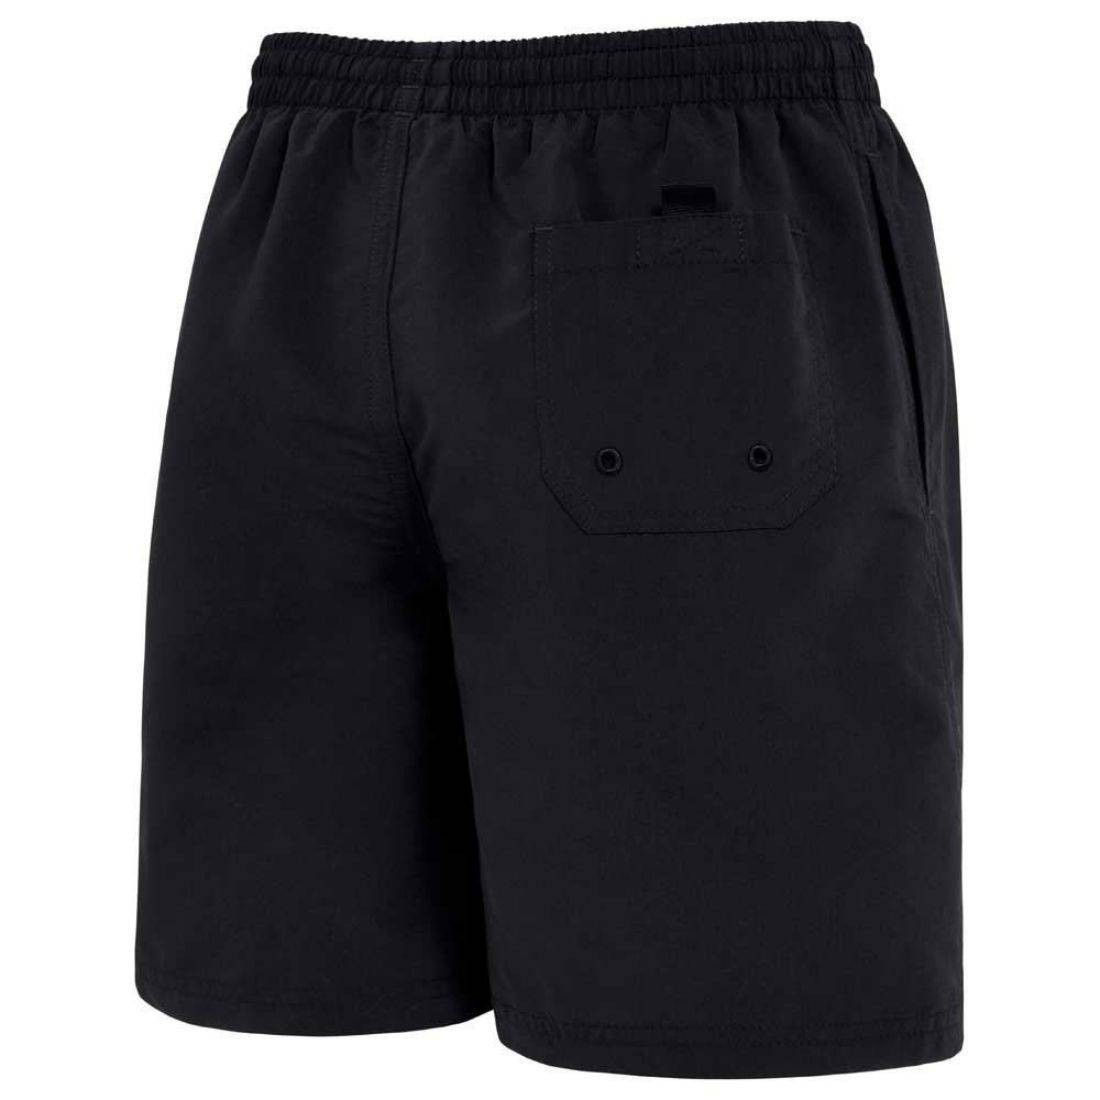 Buy Zoggs Black Penrith 15 inch Shorts ED Boys Swimwear - Zoggs ...